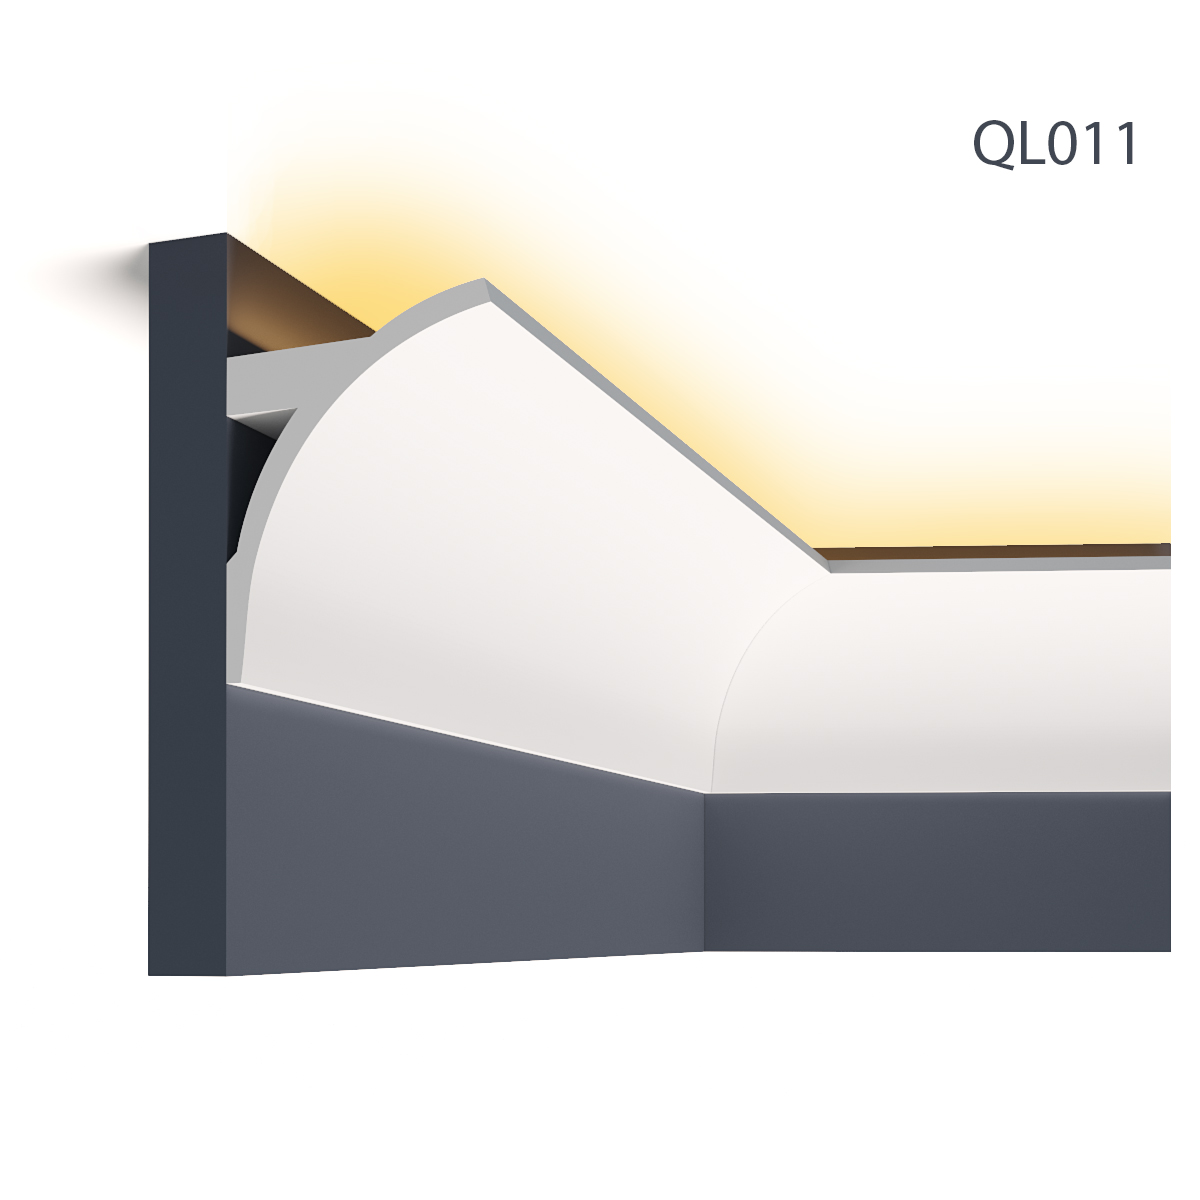 Scafe tavan (iluminat indirect, LED) Mardom Decor MRD-QL011, material: PolyForce